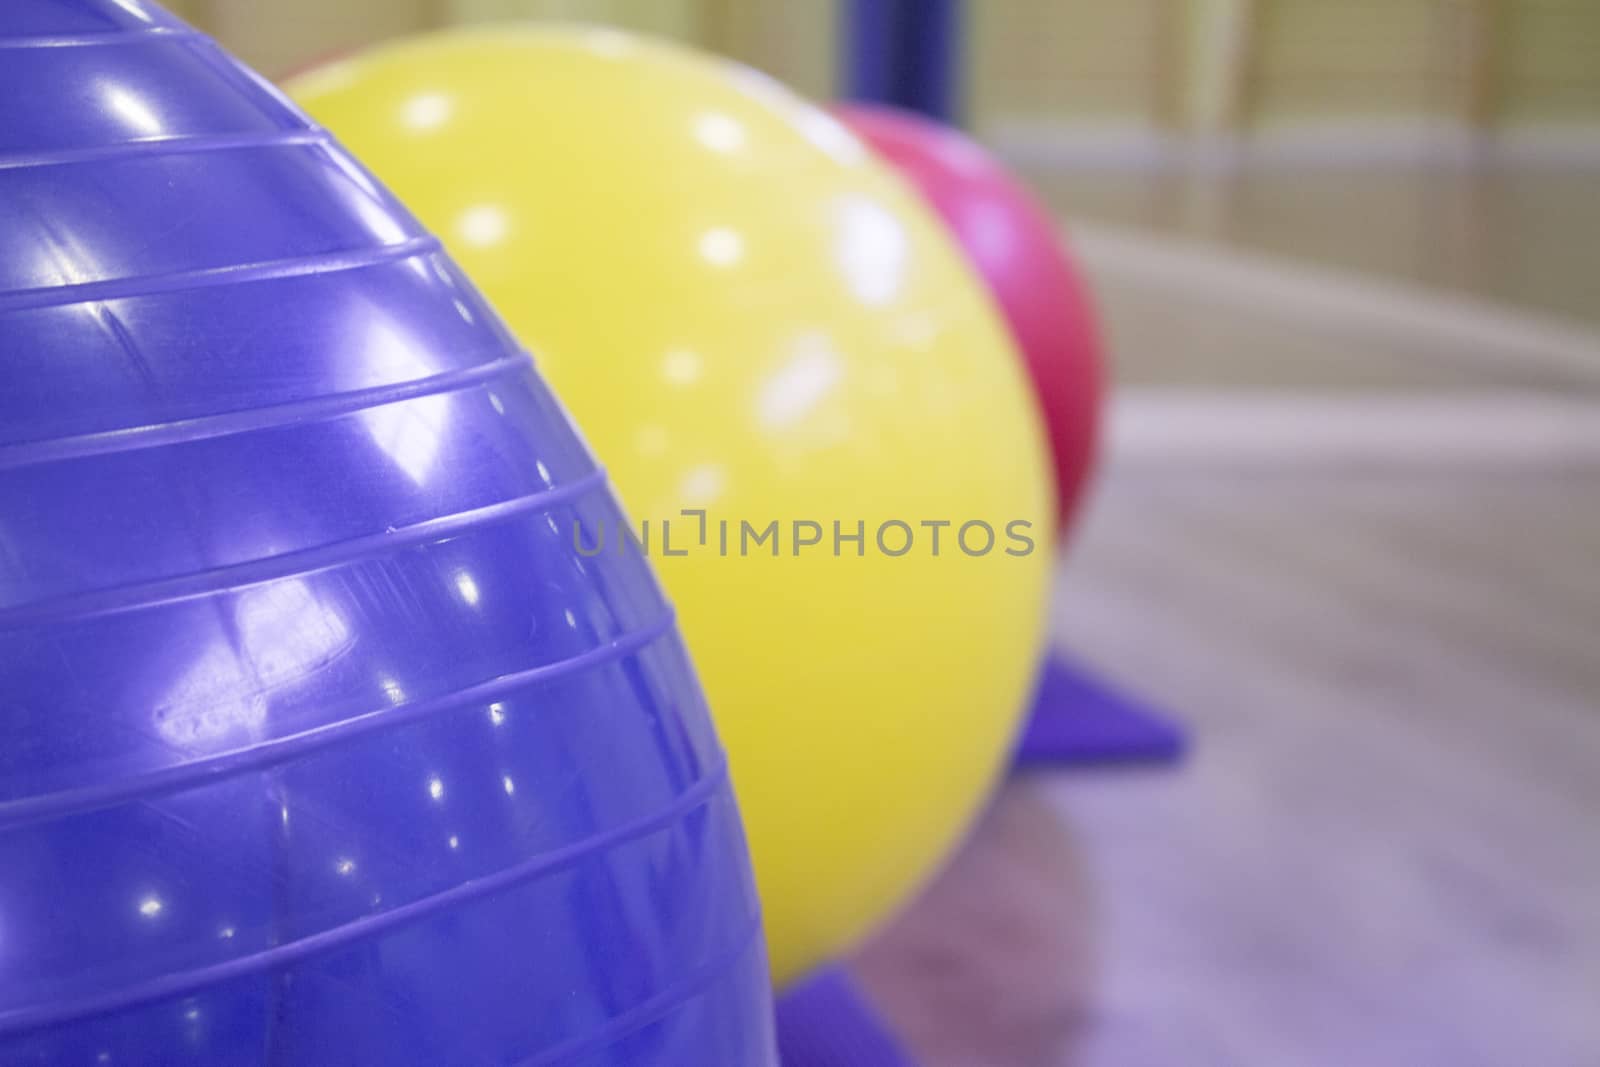 Colored balls for gymnastics and pilates classes